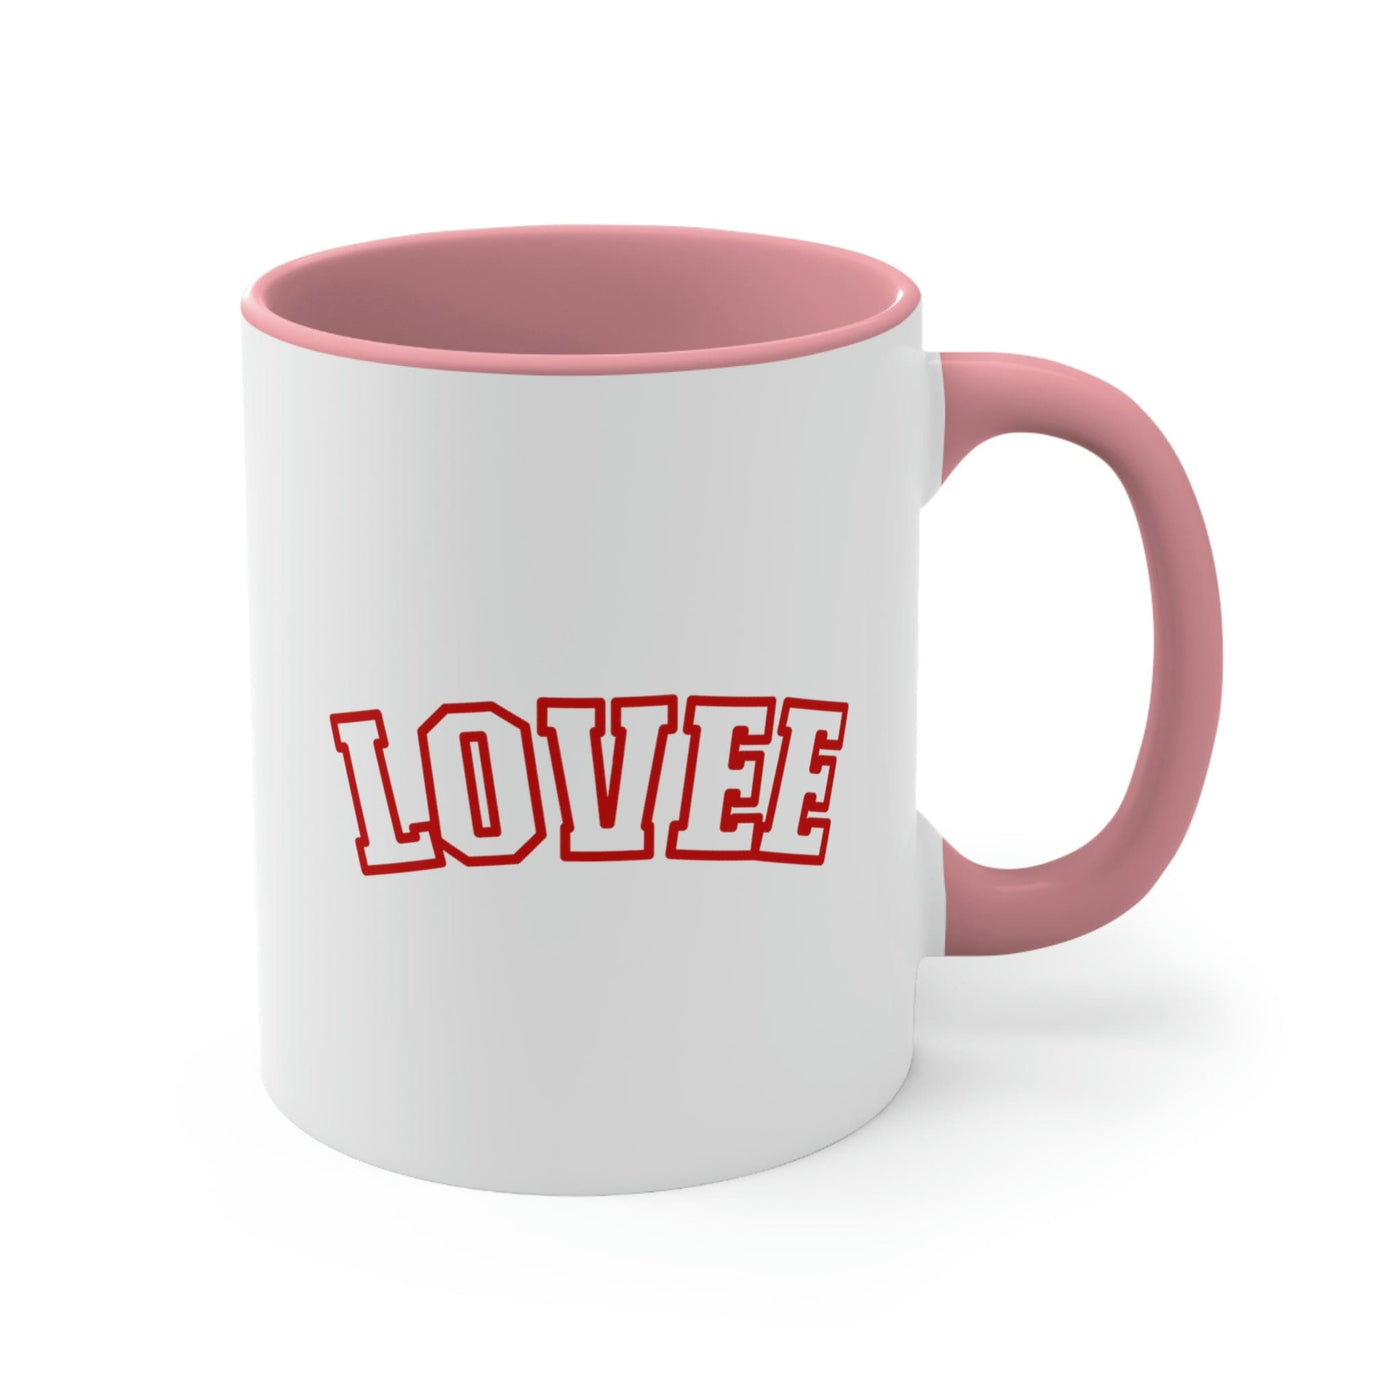 Two-tone Accent Ceramic Mug 11oz Say It Soul Lovee - Decorative | Ceramic Mugs